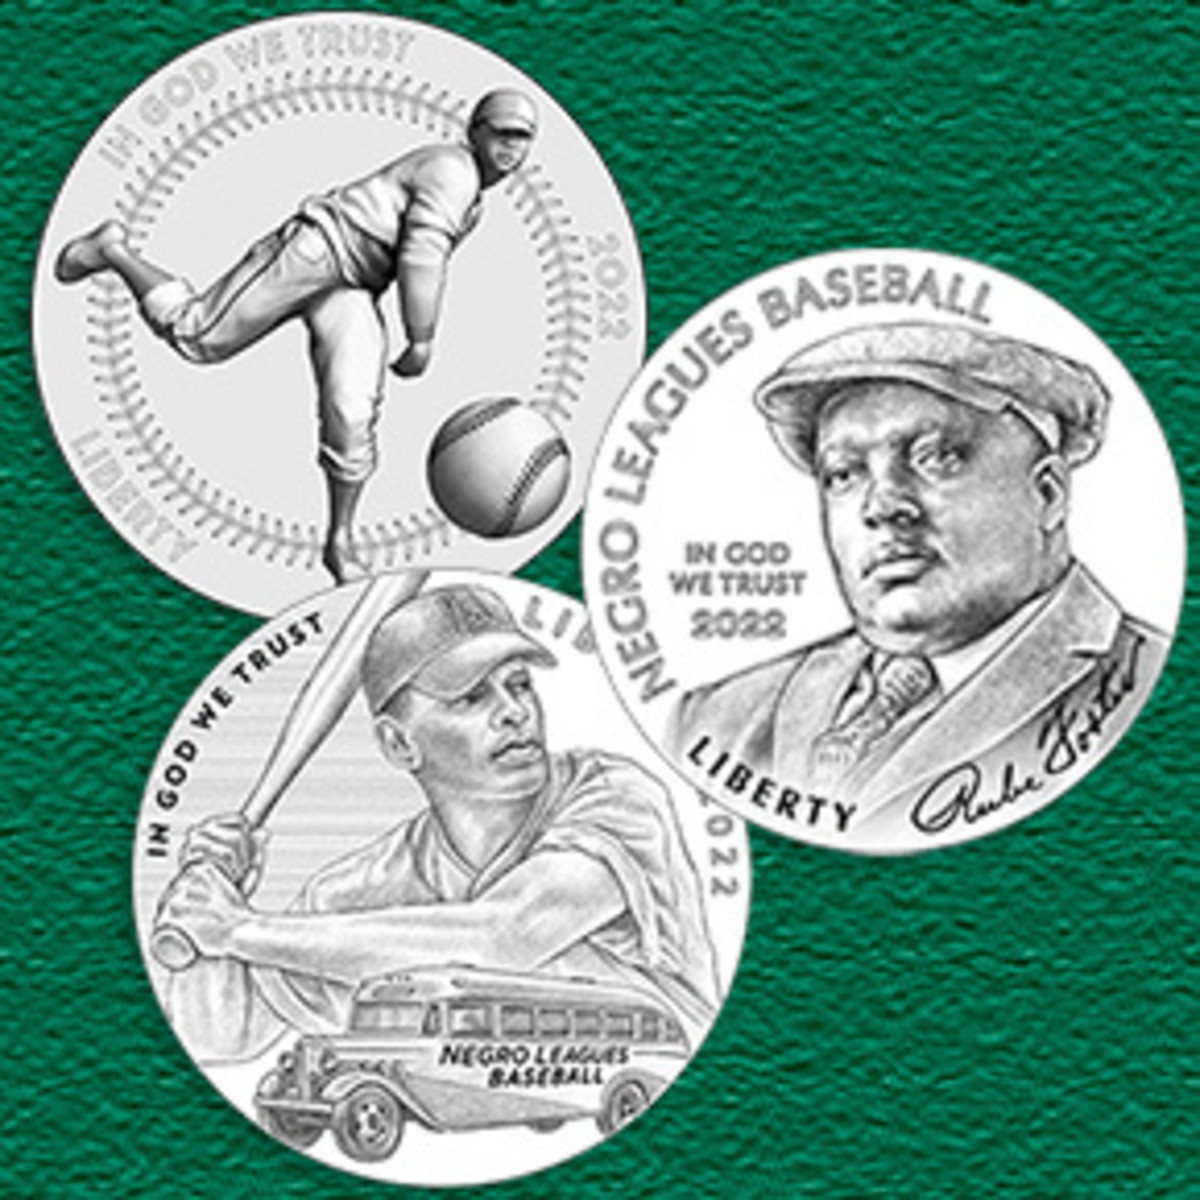 Negro Leagues Baseball coins. (Image courtesy United States Mint.)